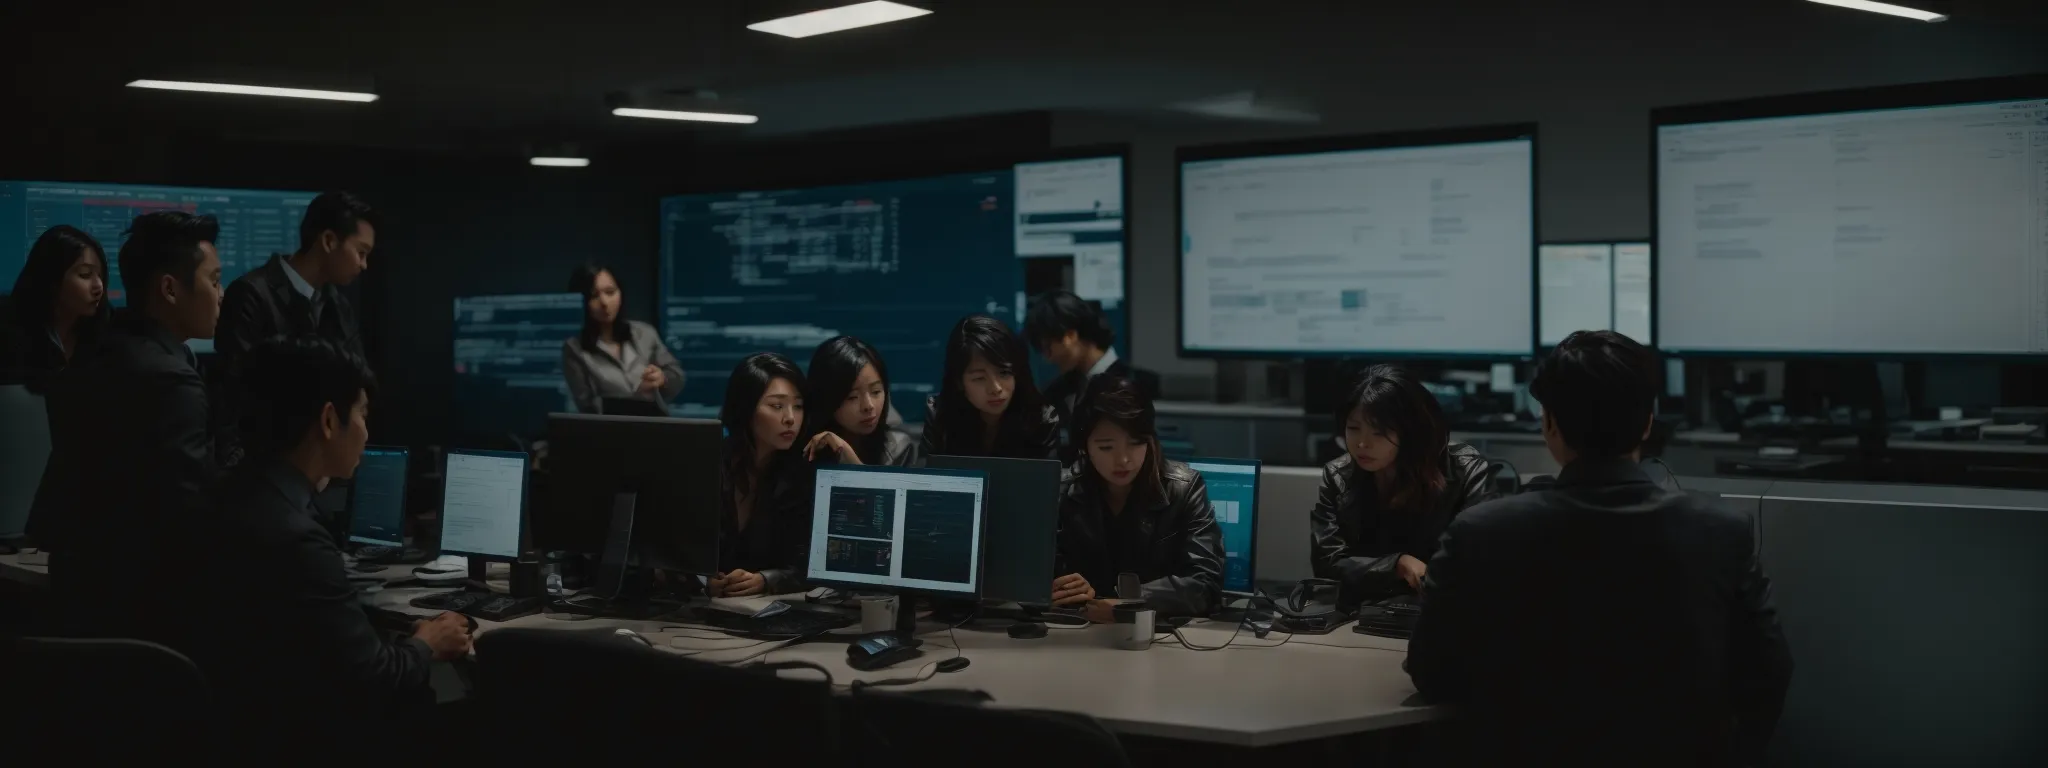 a digital marketing team huddles around a computer, analyzing website performance metrics.